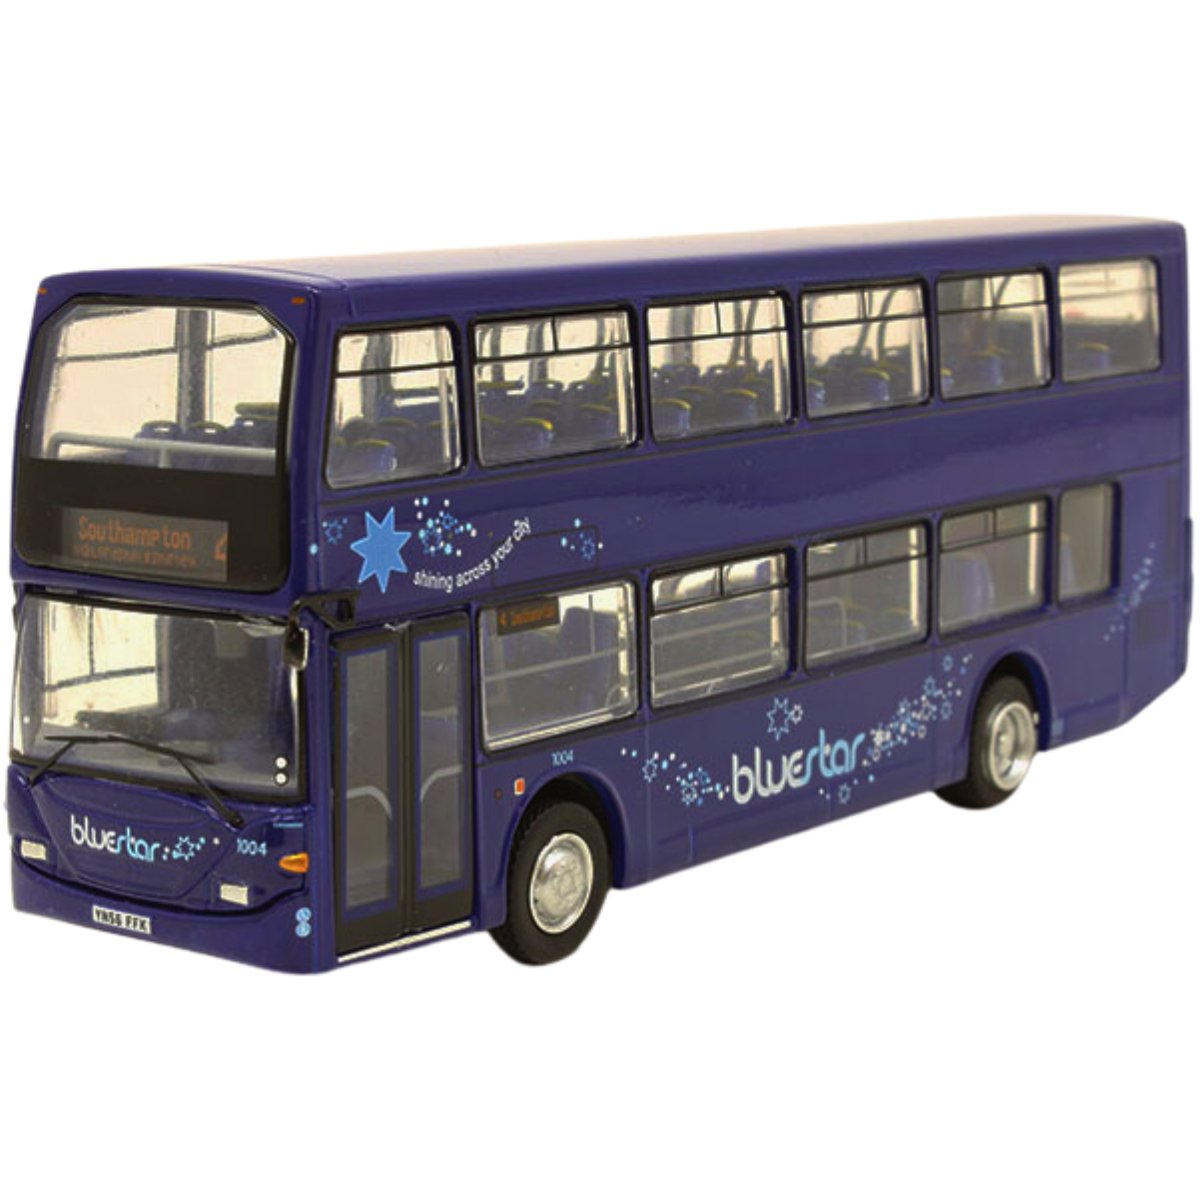 Britbus ES-17B Scania Omnidekka Bluestar - Southampton - Phillips Hobbies